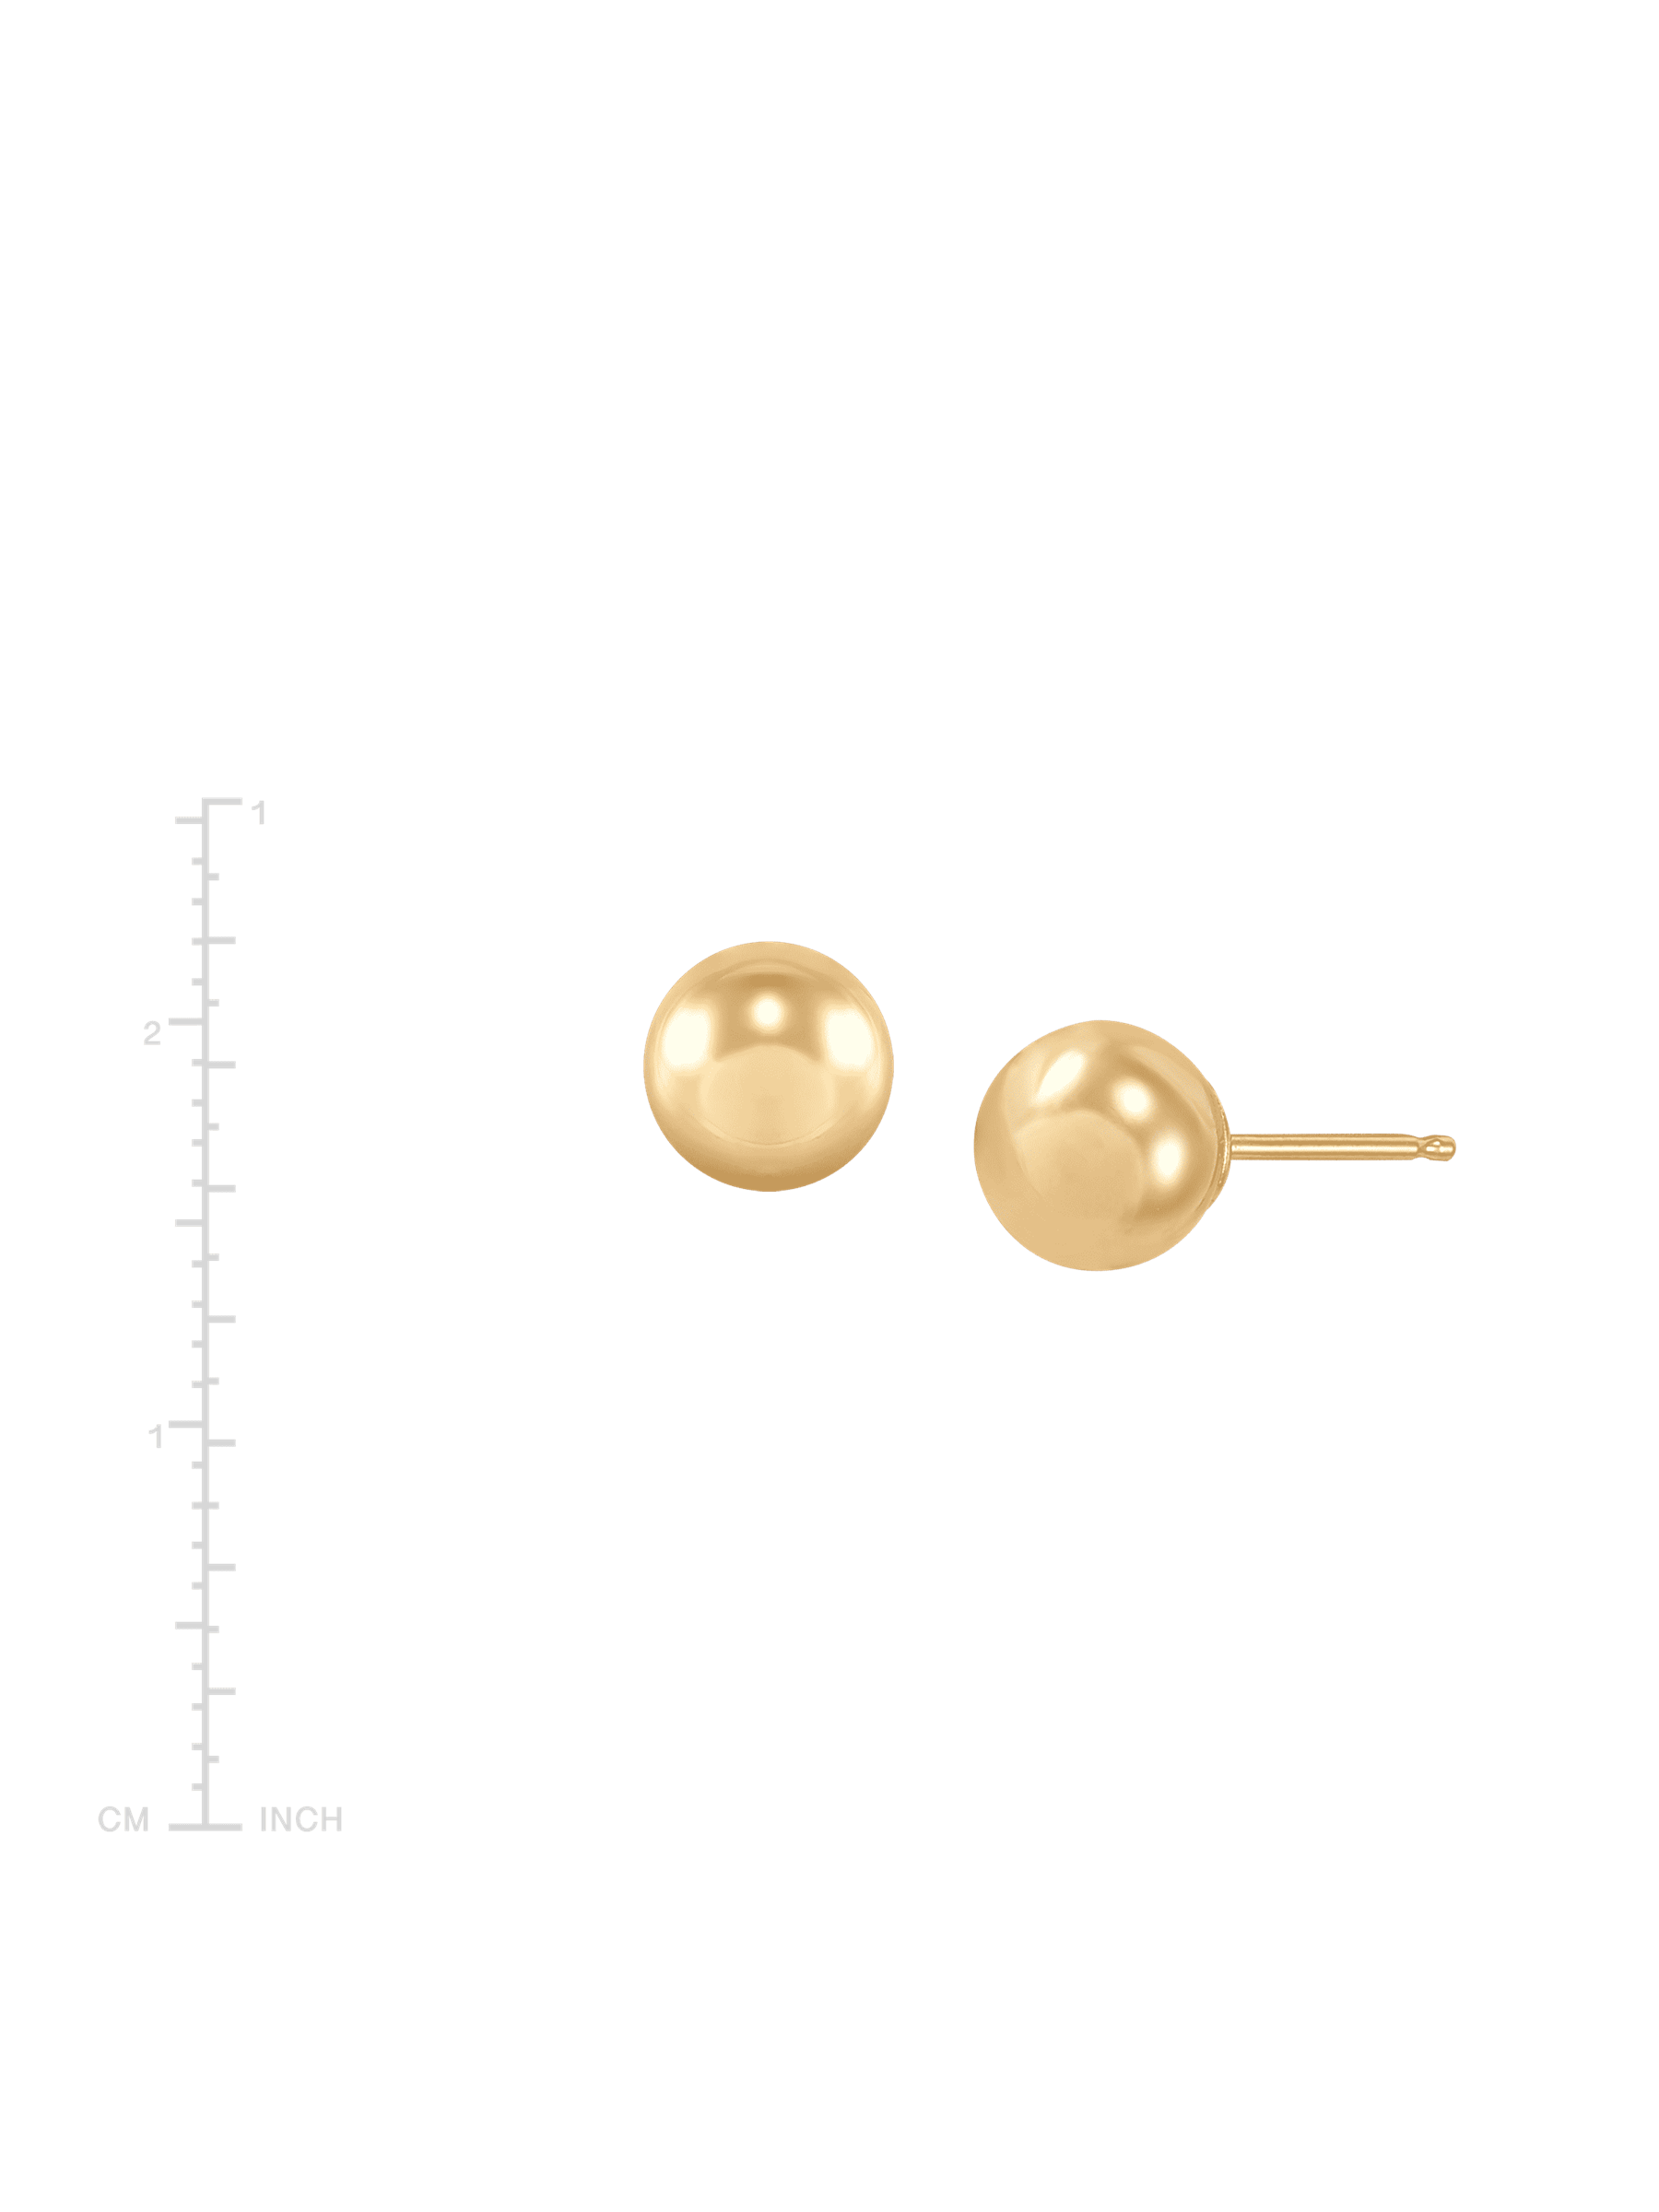 Women's Finecraft 6mm Ball Stud Earrings in 14kt Yellow Gold - image 4 of 5